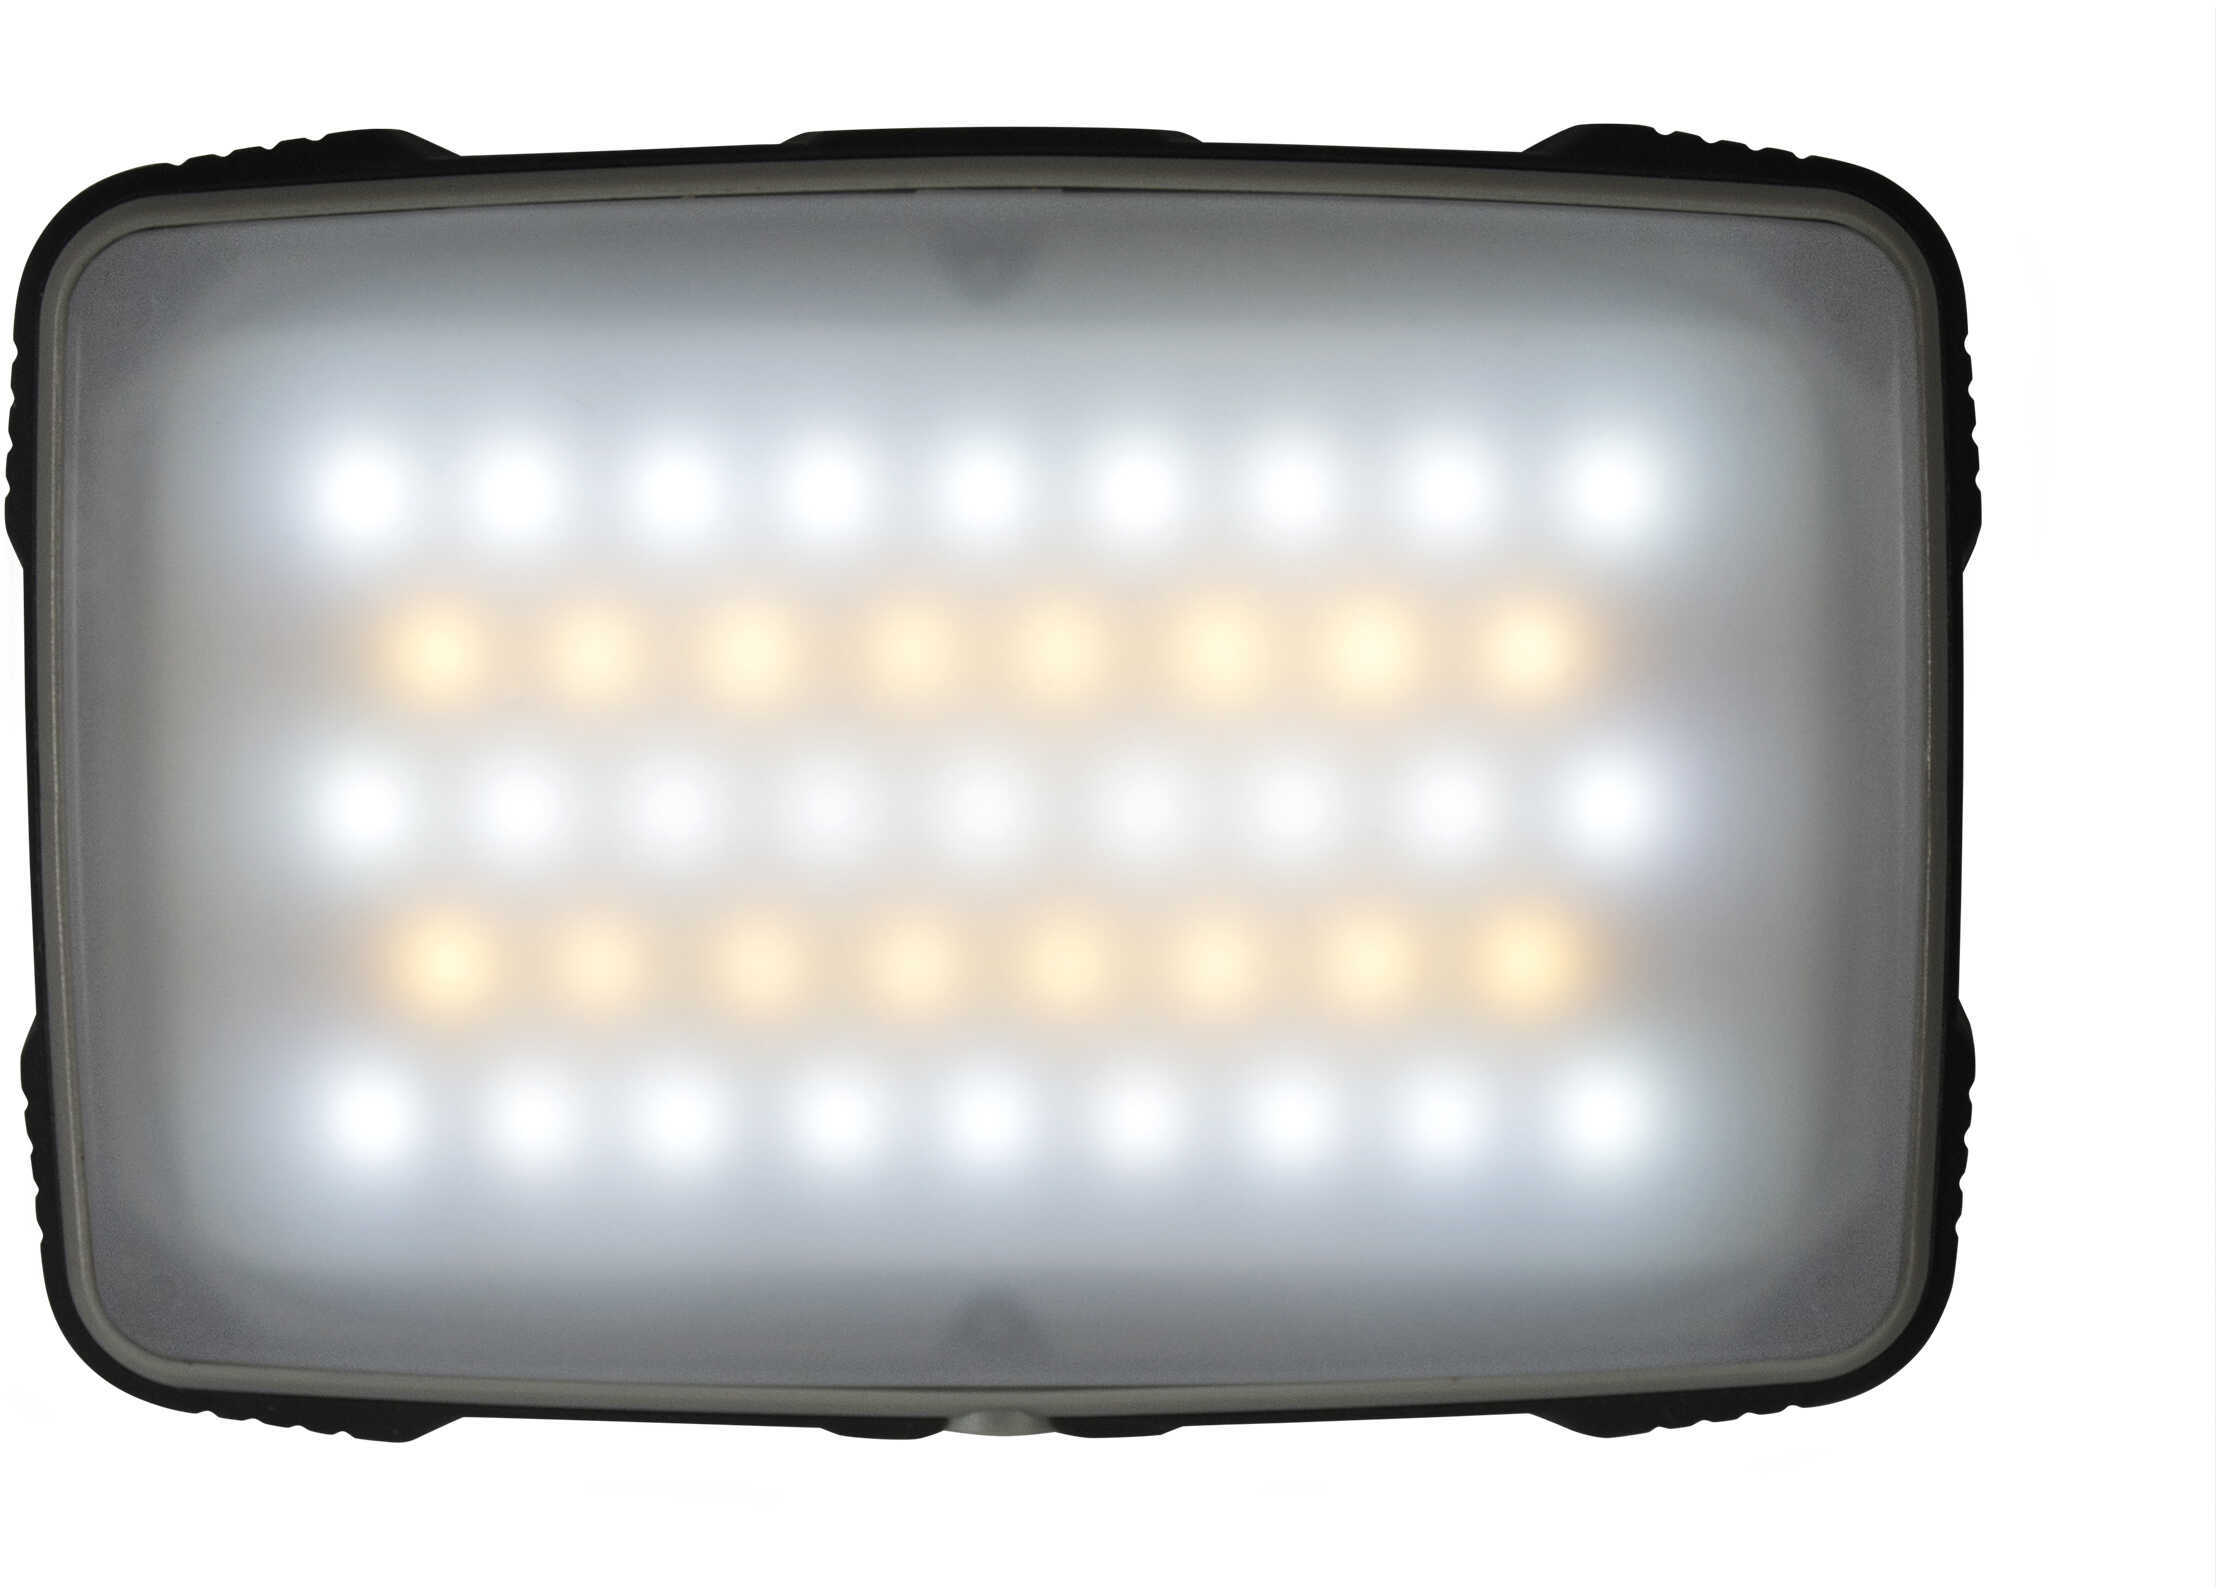 UST Slim Led Emergency Light 1100 Lumens W/ 4 MODES